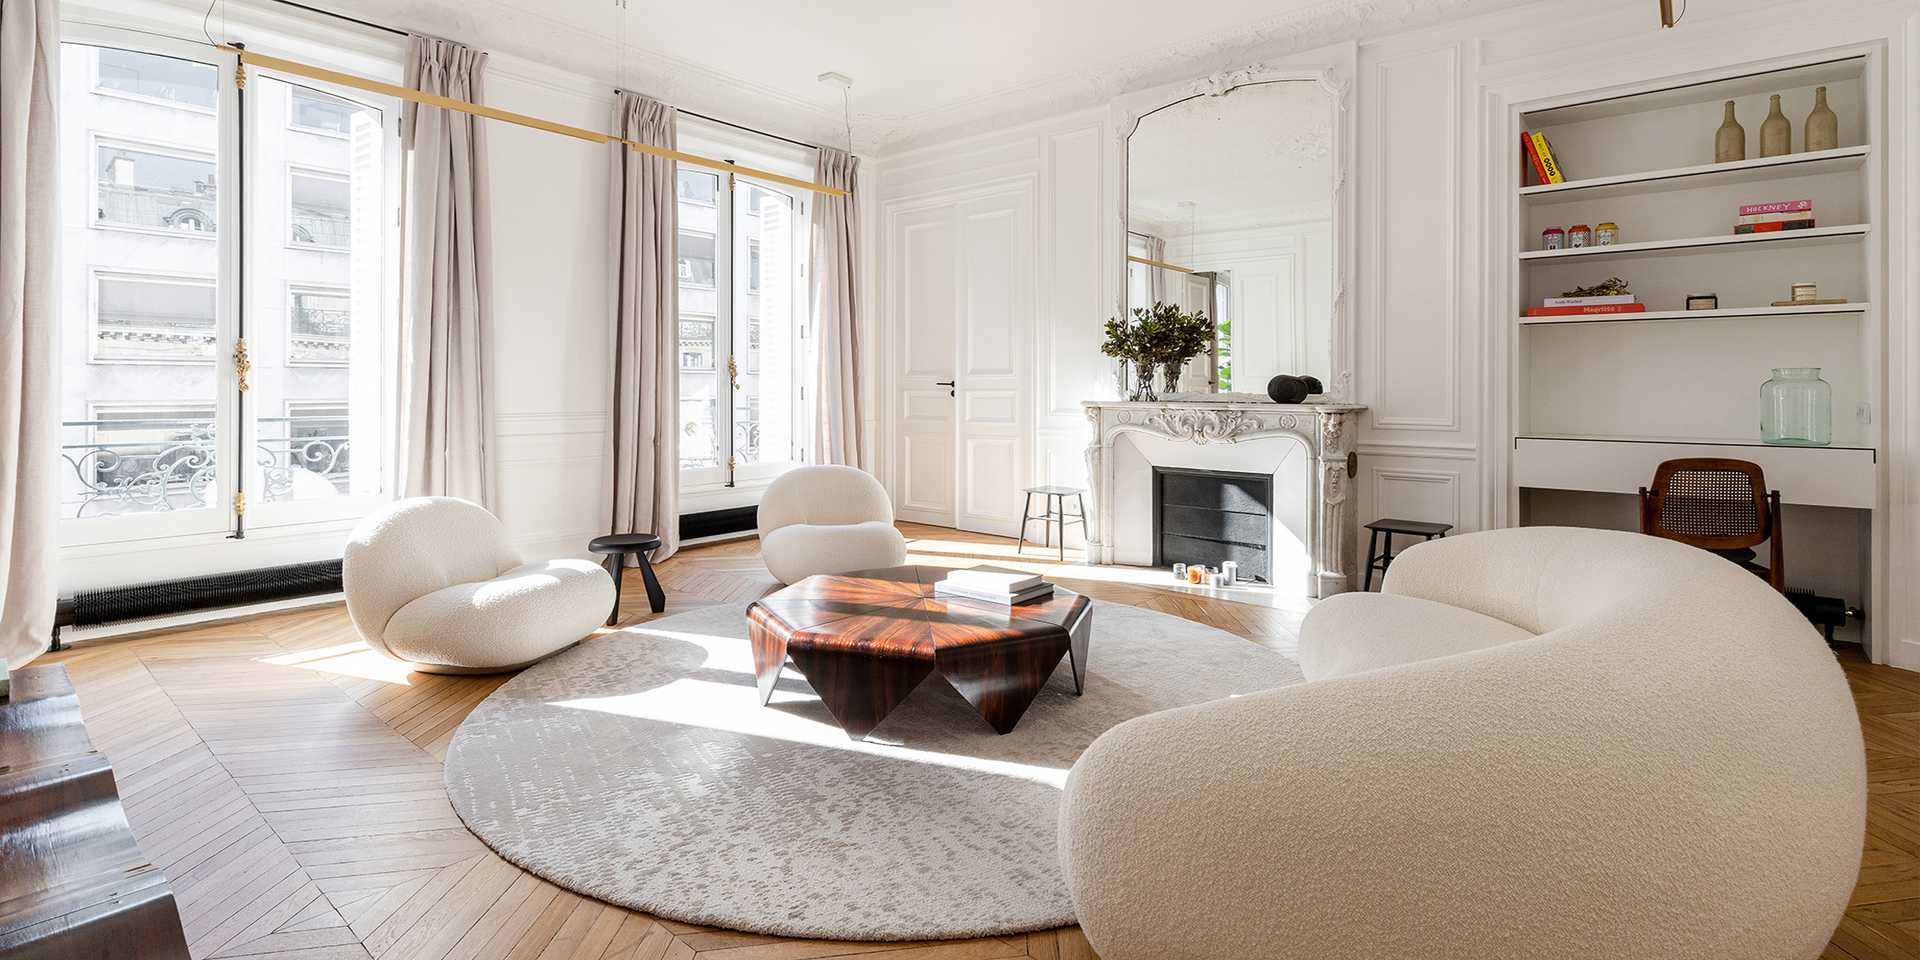 Renovation of a Haussmann apartment in Paris by an interior designer